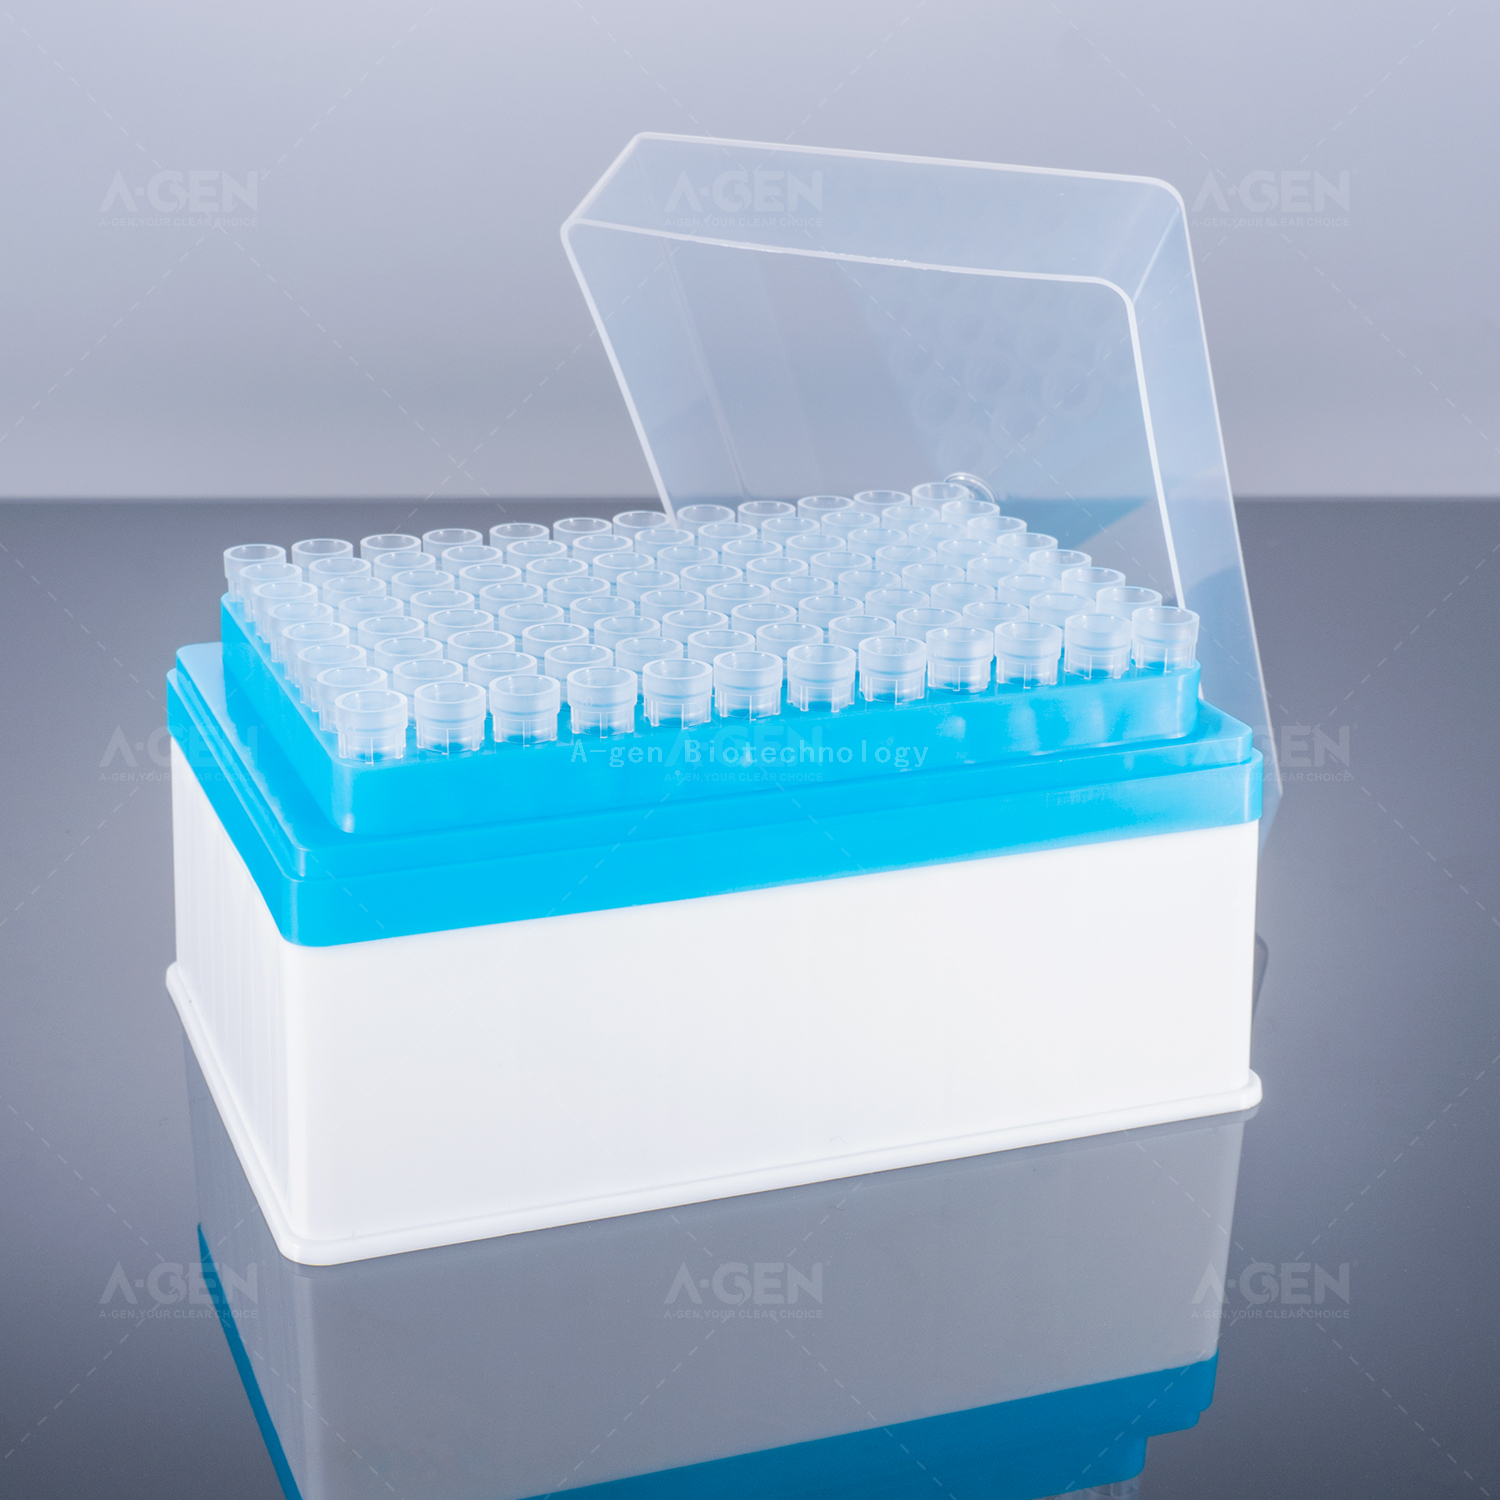 Tecan LiHa 50μL Transparent PP Pipette Tip (SBS Racked,sterilized) for Liquid Transfer No Filter TT-50-HSL Low Retention